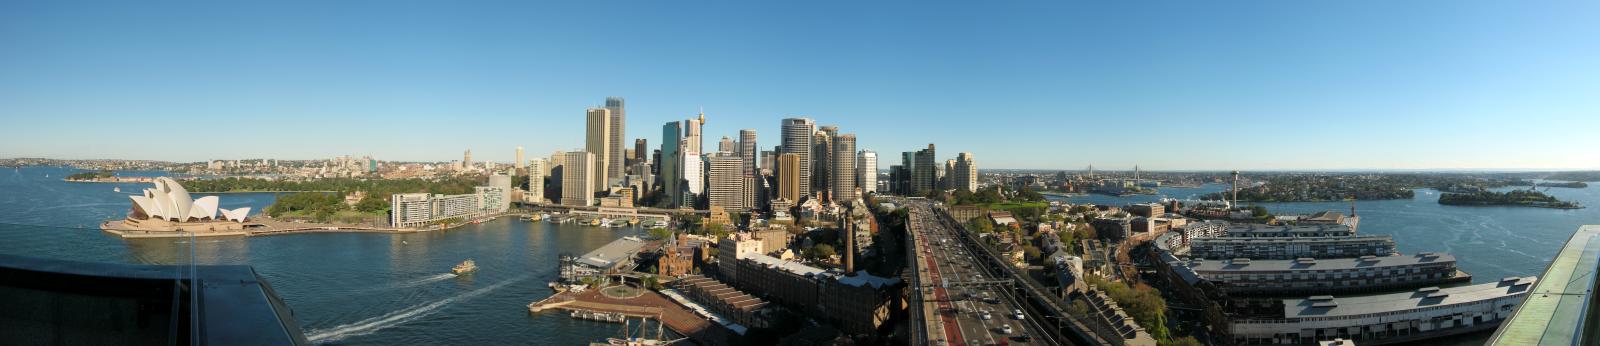 Sydney CBD (panorama view from bridge)